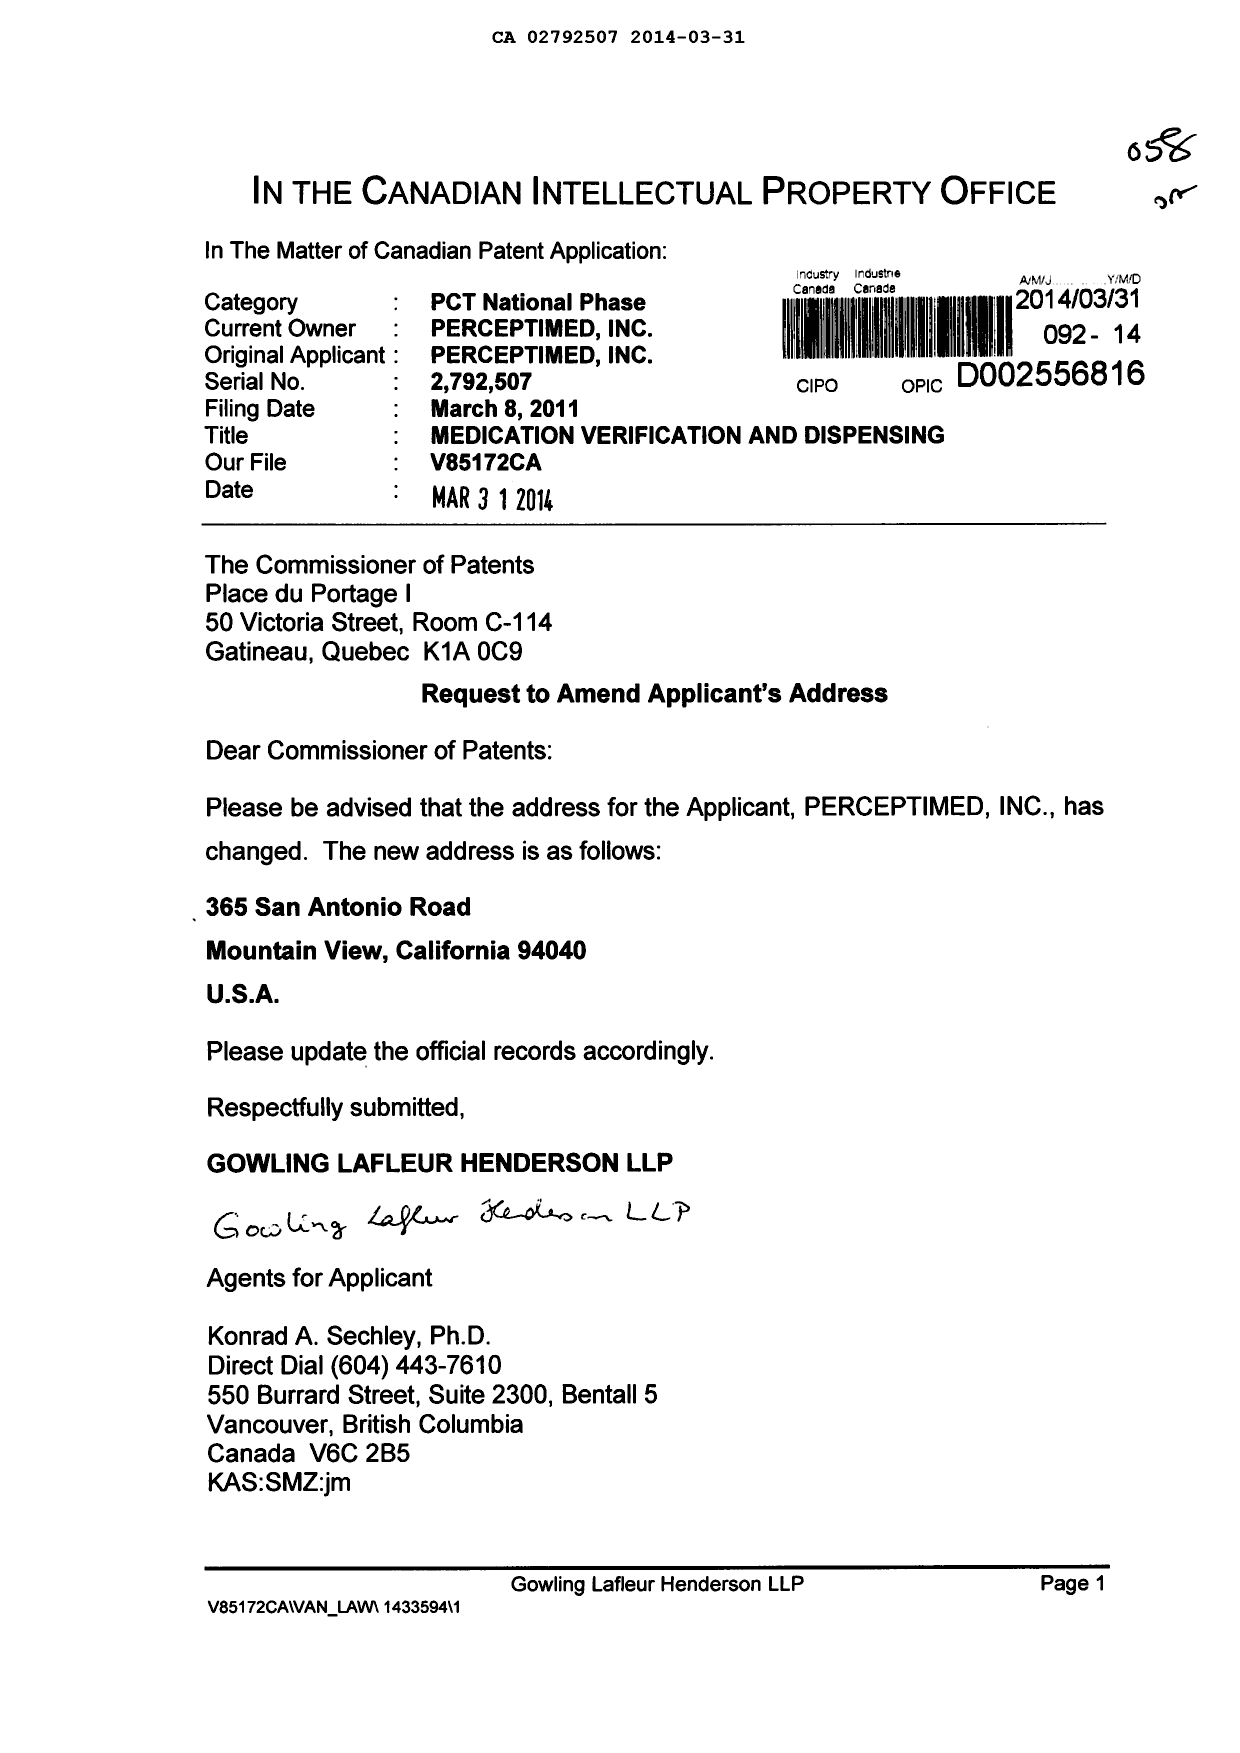 Canadian Patent Document 2792507. Correspondence 20140331. Image 1 of 1